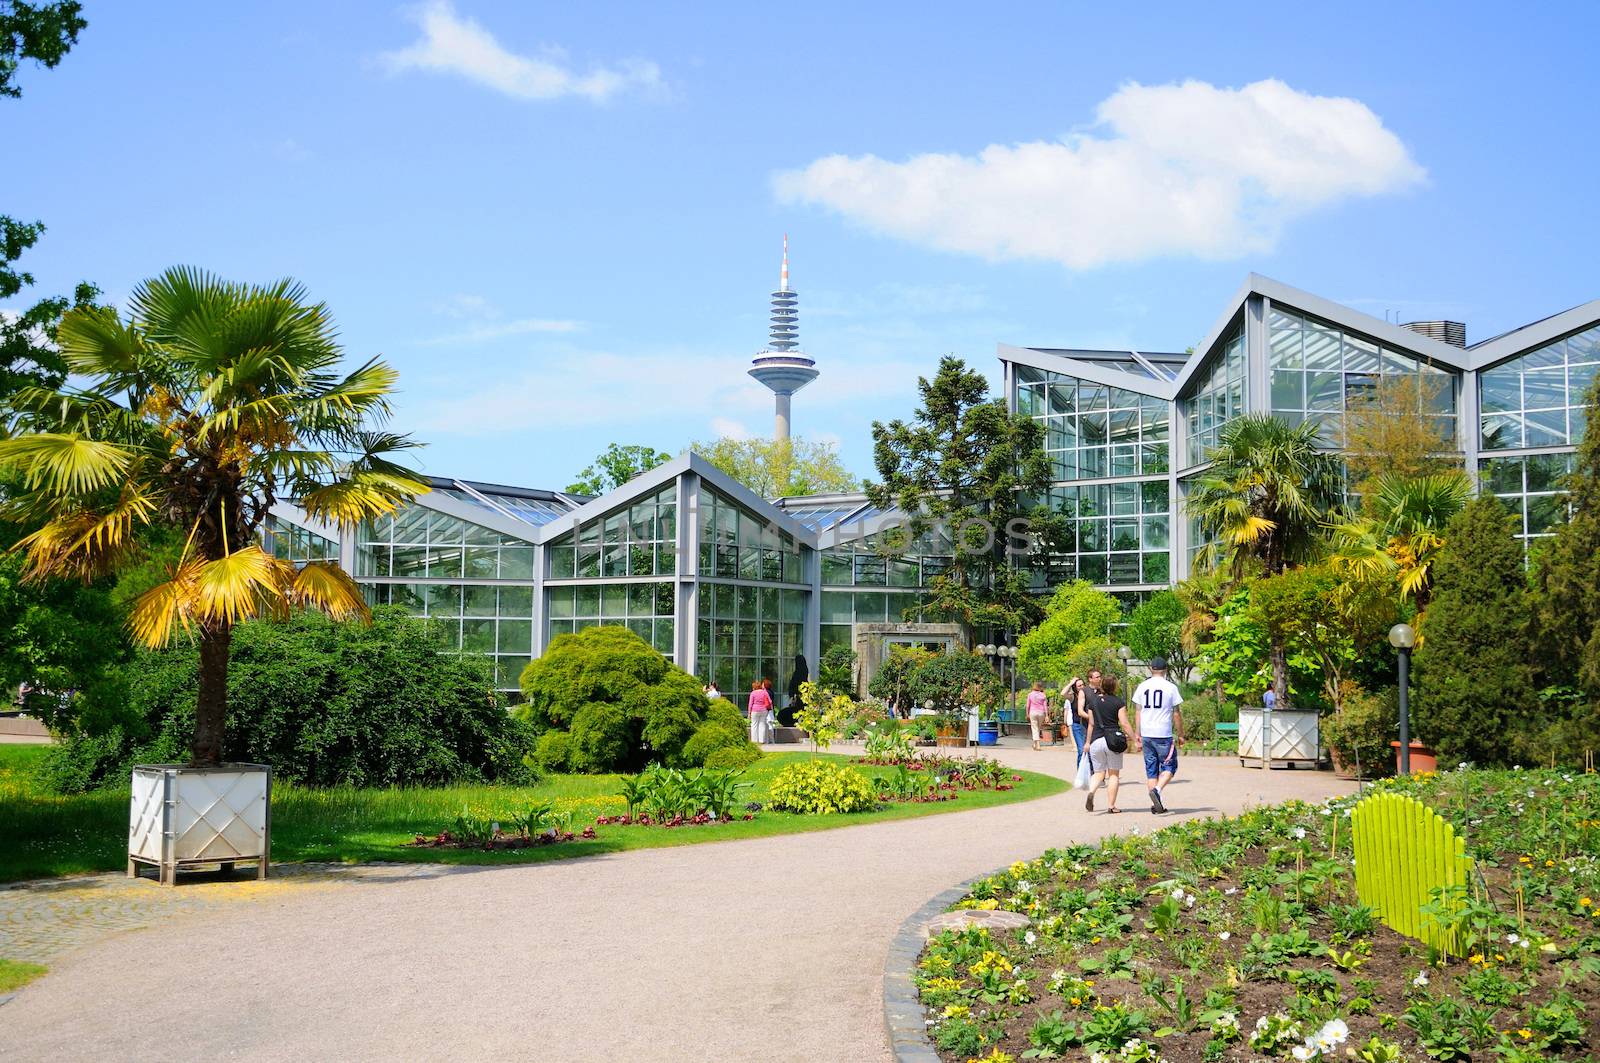 Nature of Palmen Garten, Frankfurt am Main, Hessen, Germany by Eagle2308